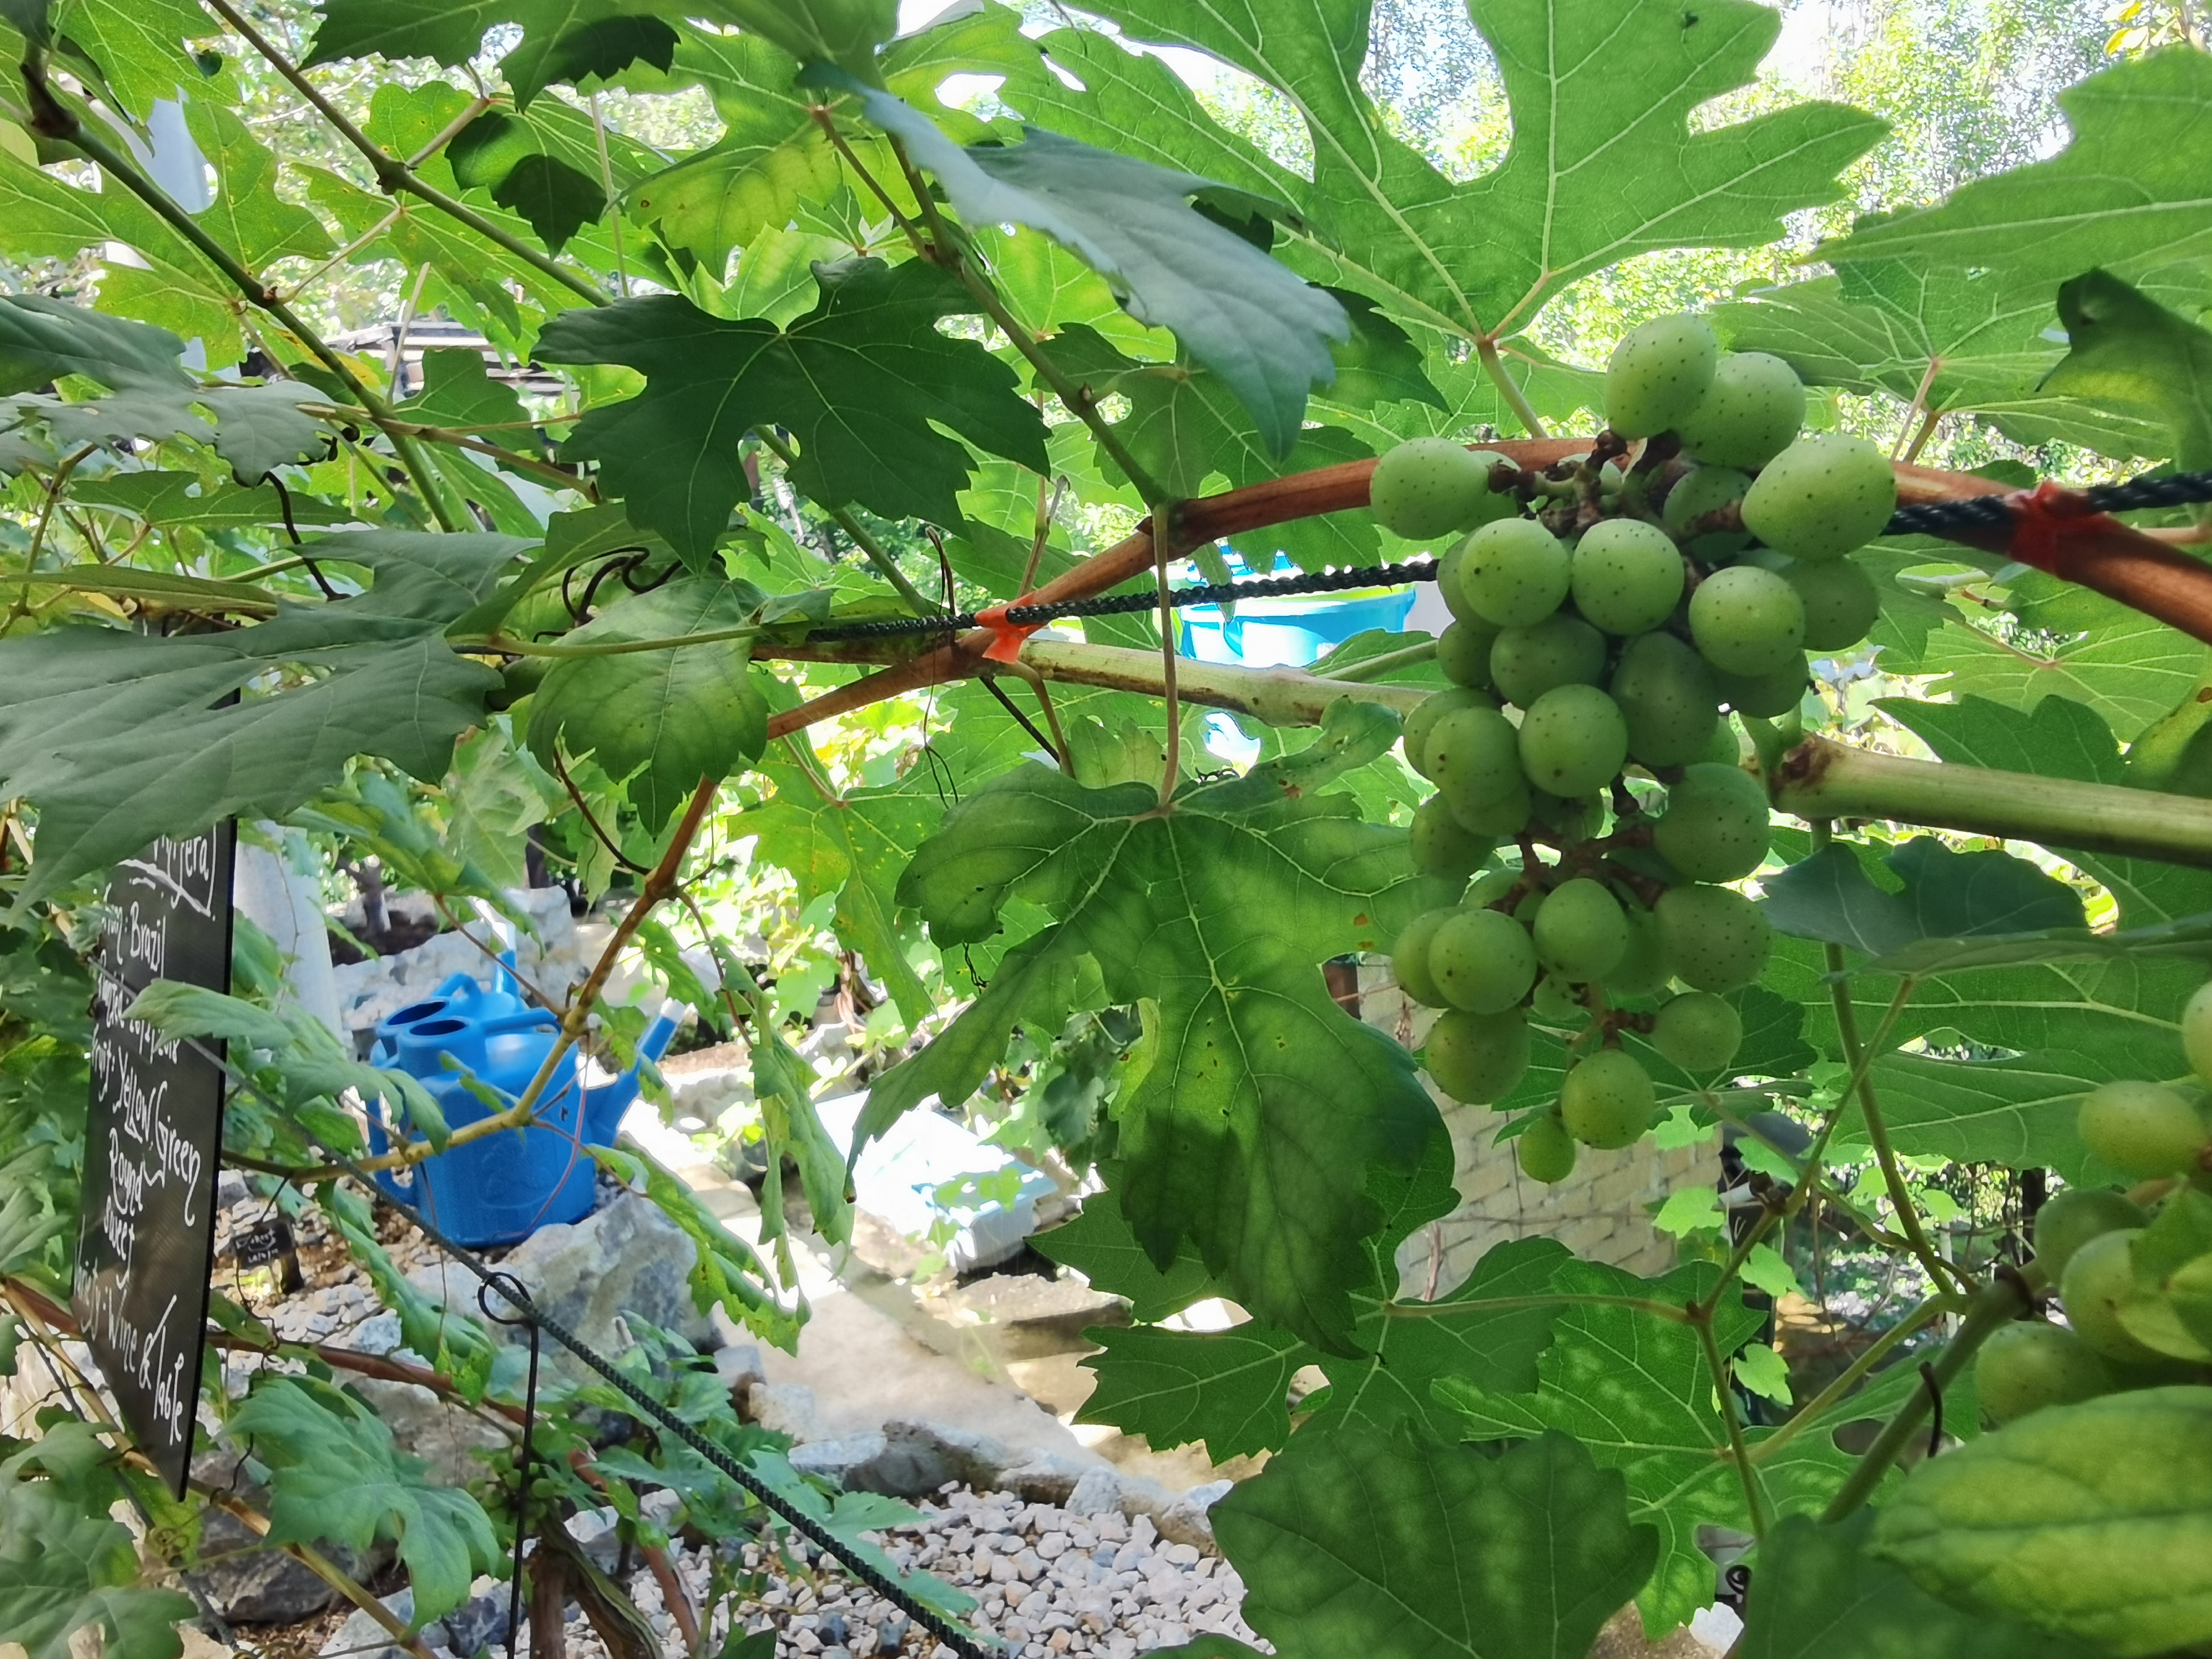 Pinehill种植的葡萄会制成果酱及果汁等产品。-庄礼文摄-